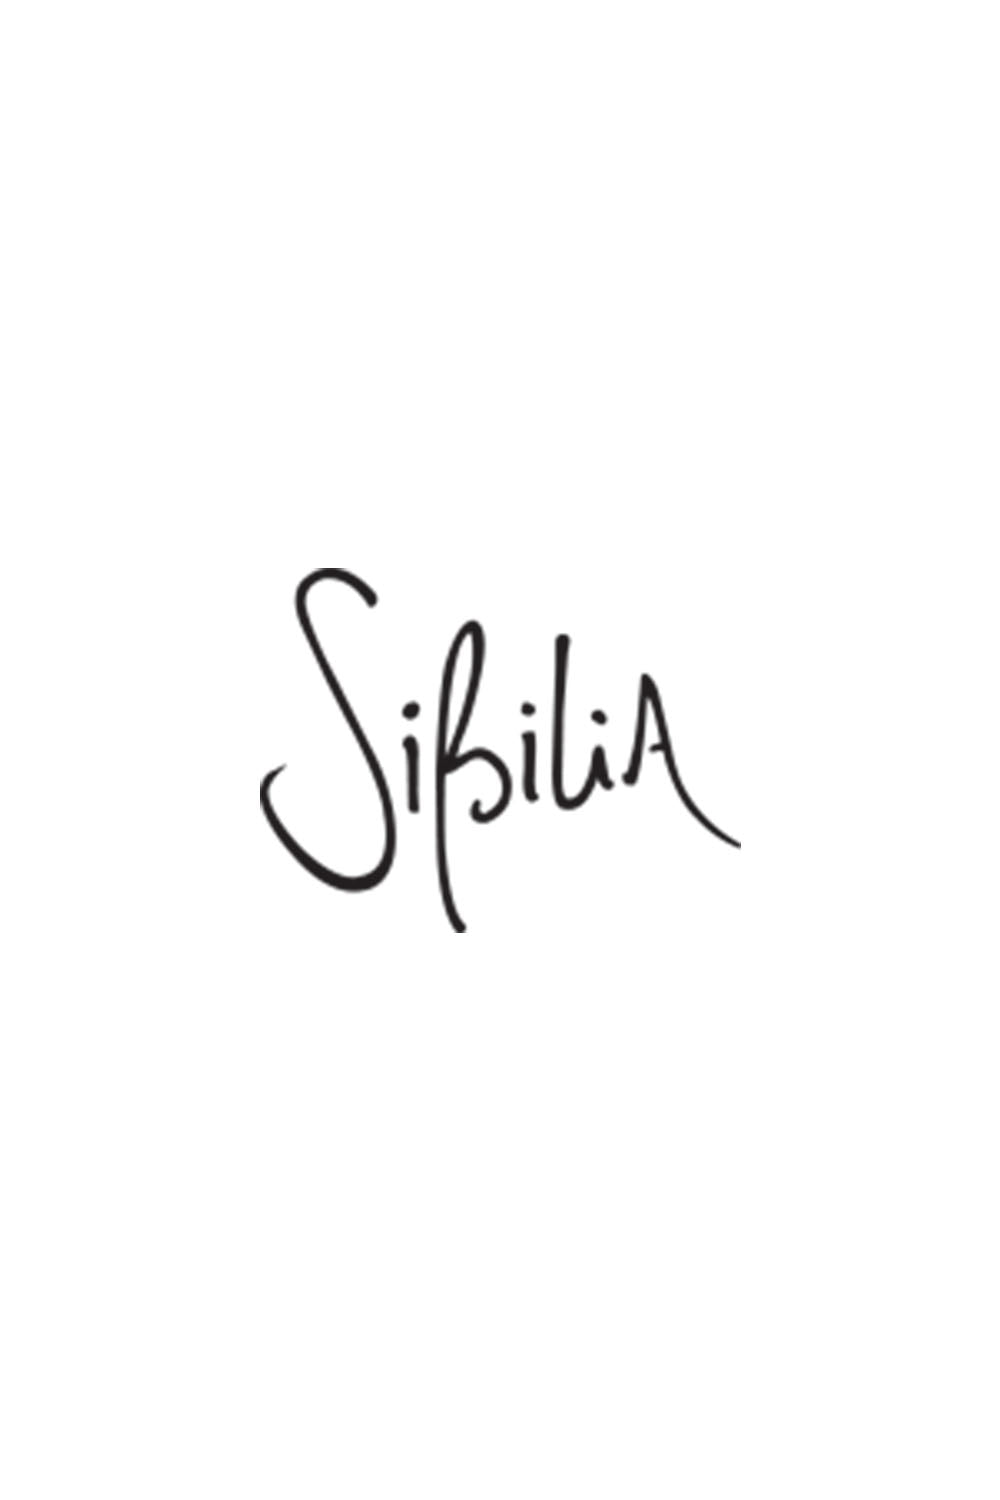 Sibilia